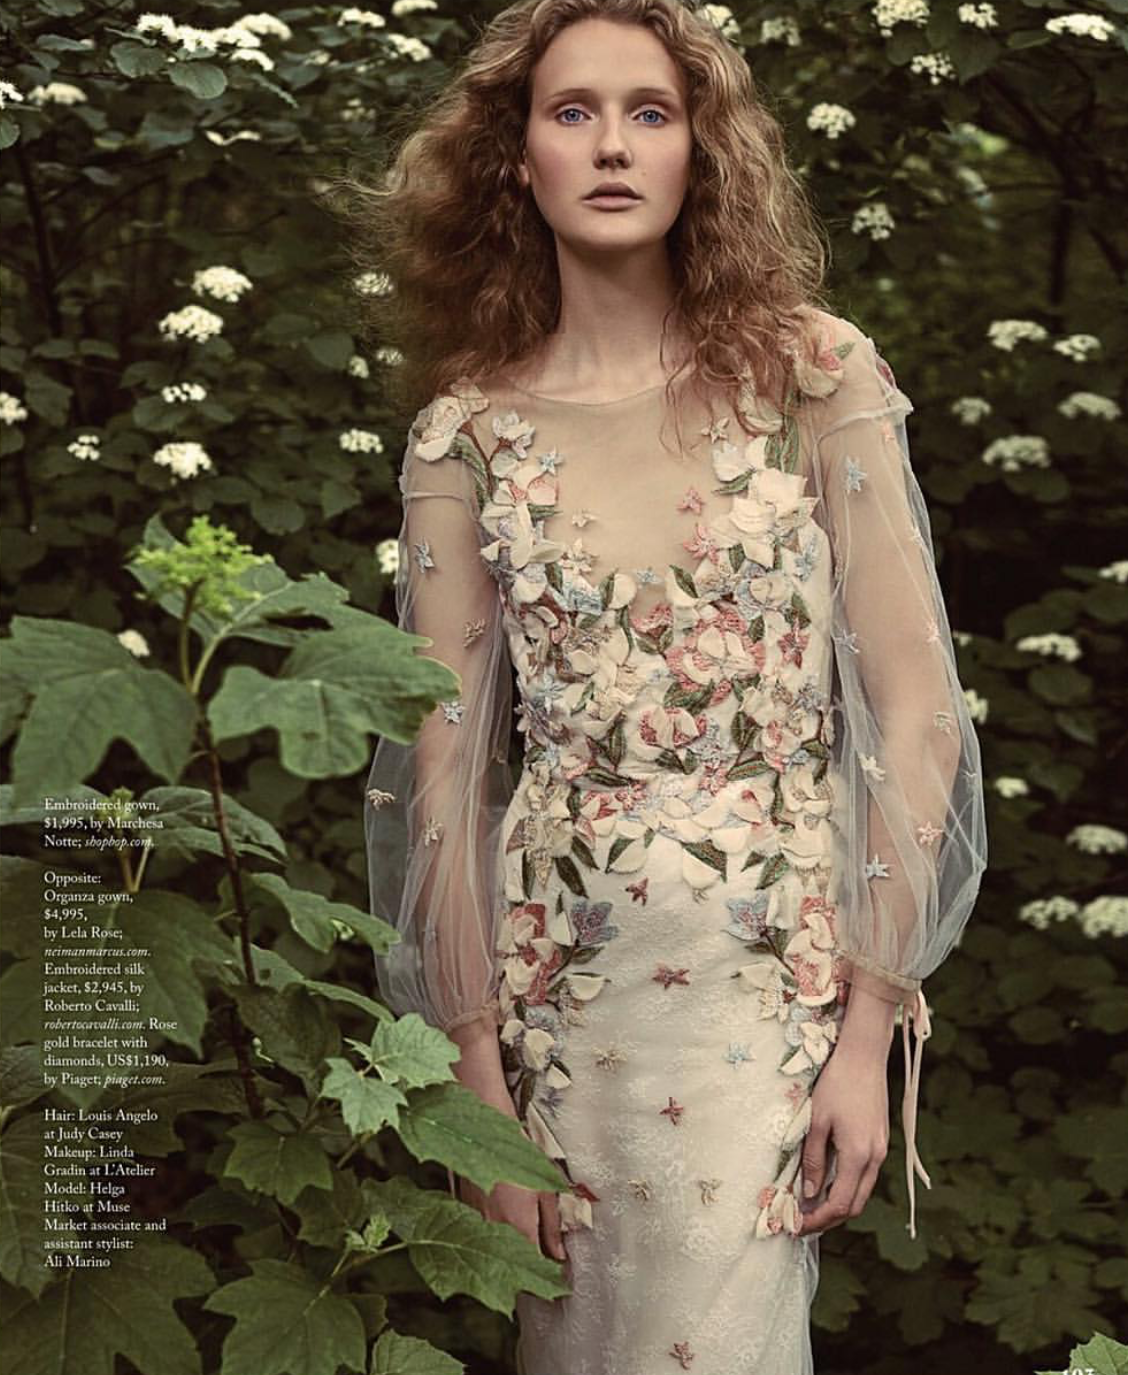   Marchesa Notte Dress Featured In Ritz Carlton Magazine Editorial  